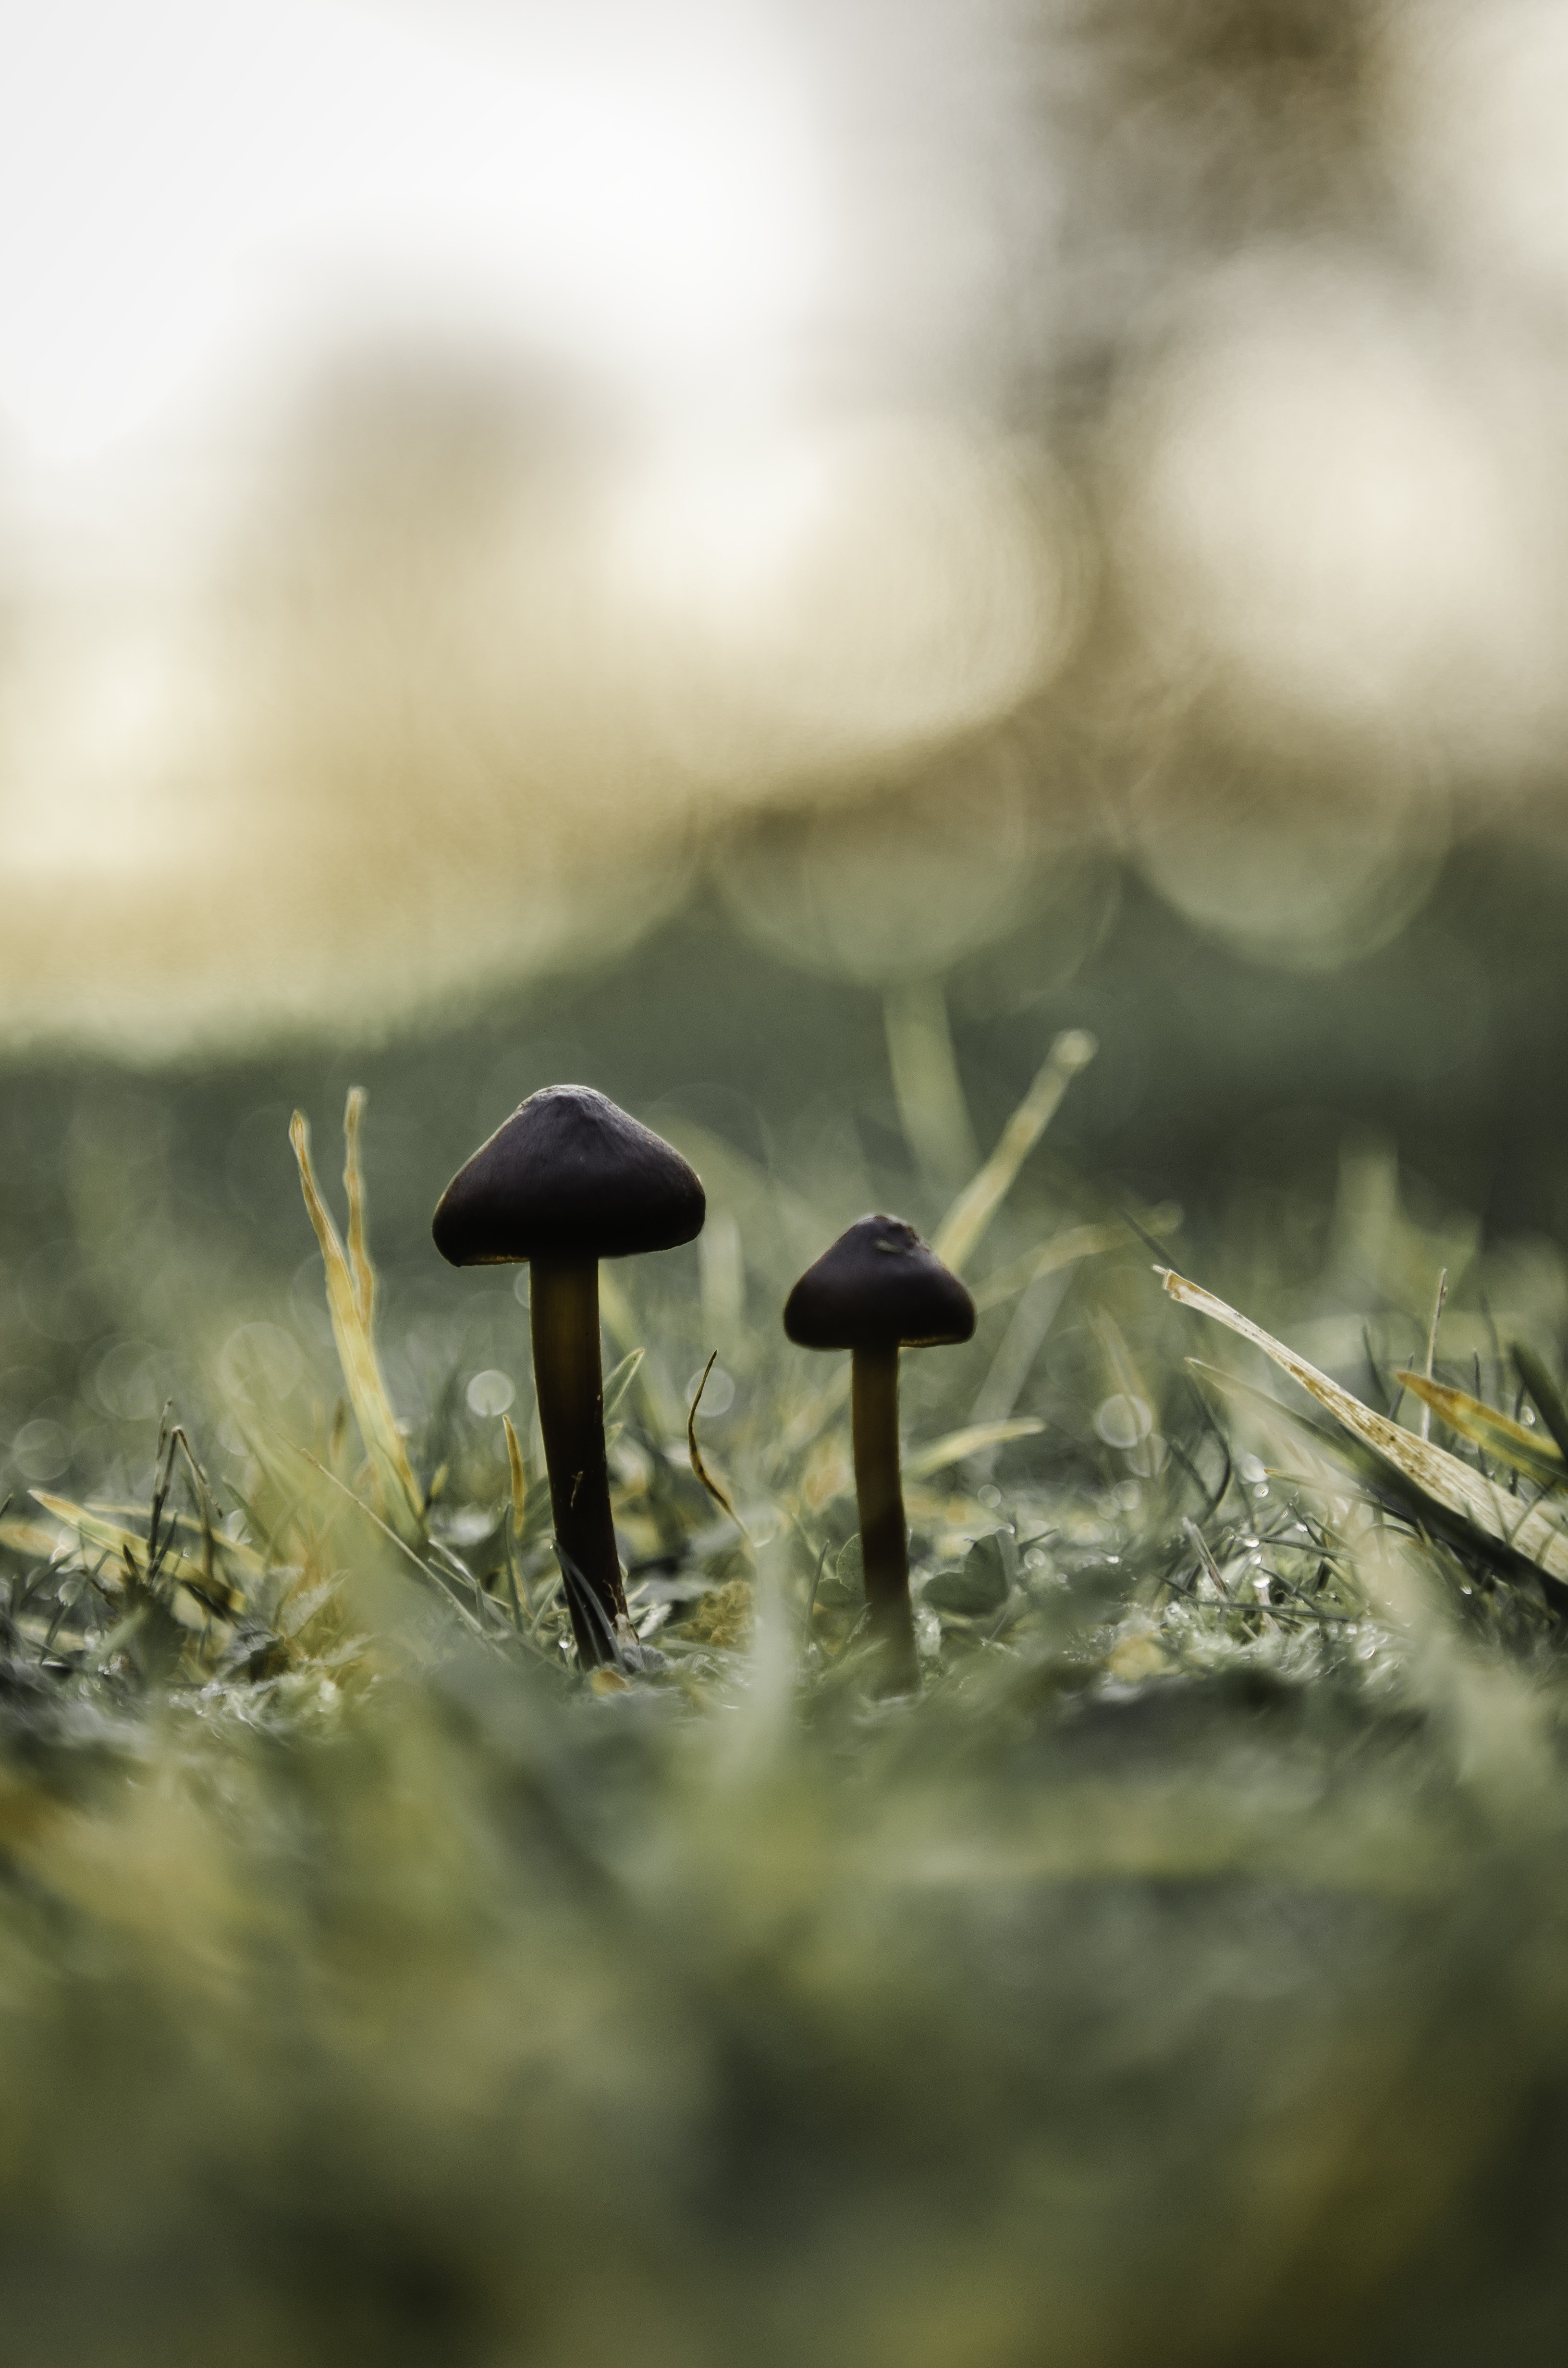 General 3264x4928 nature mushroom plants closeup portrait display macro blurred blurry background ground